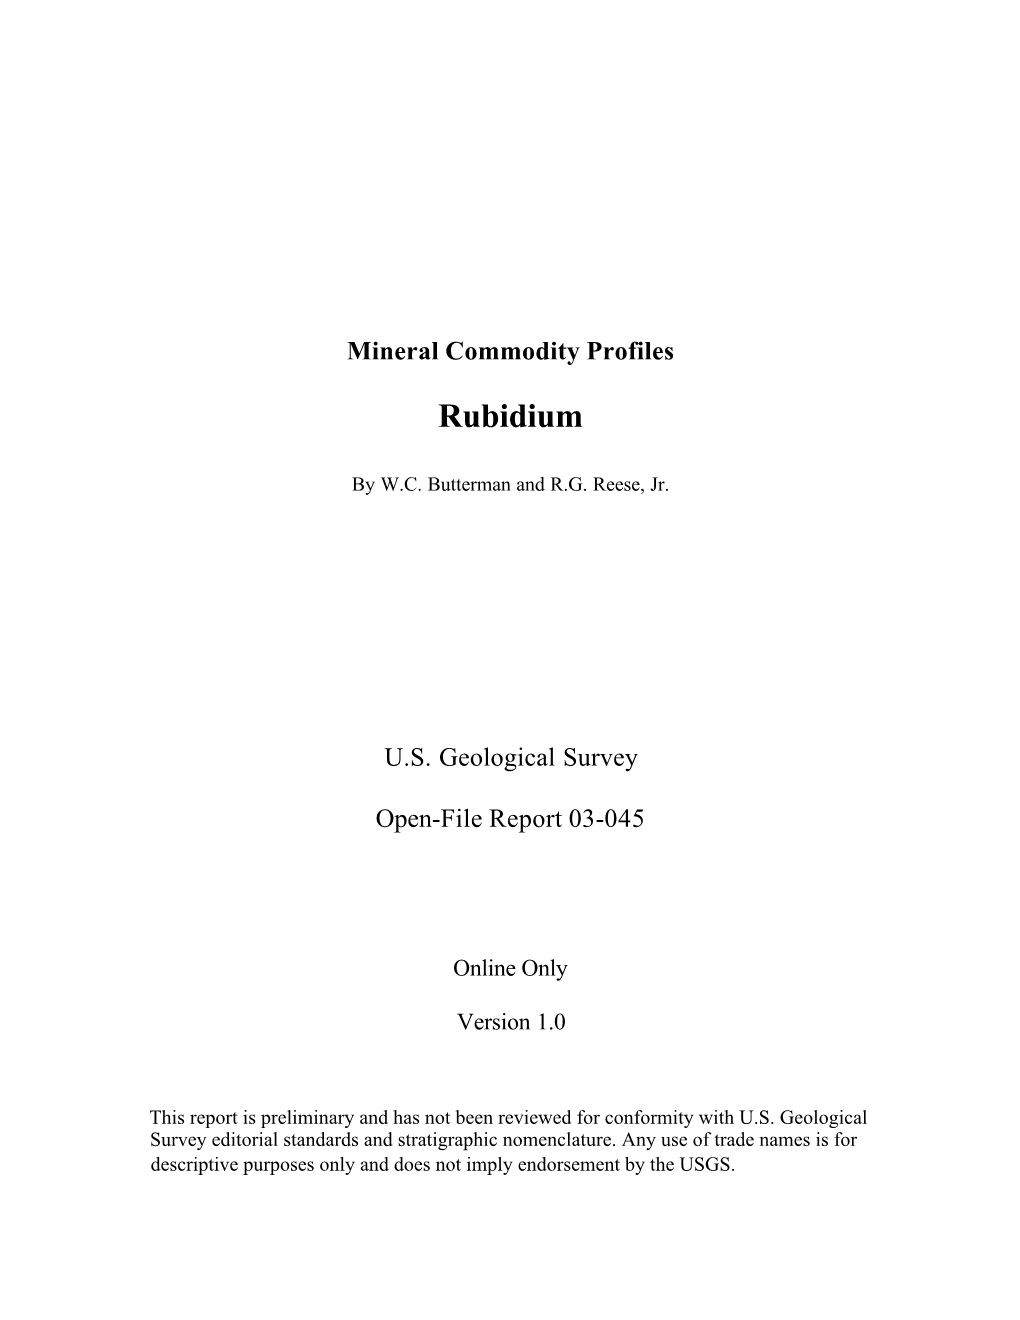 Mineral Commodity Profiles Rubidium